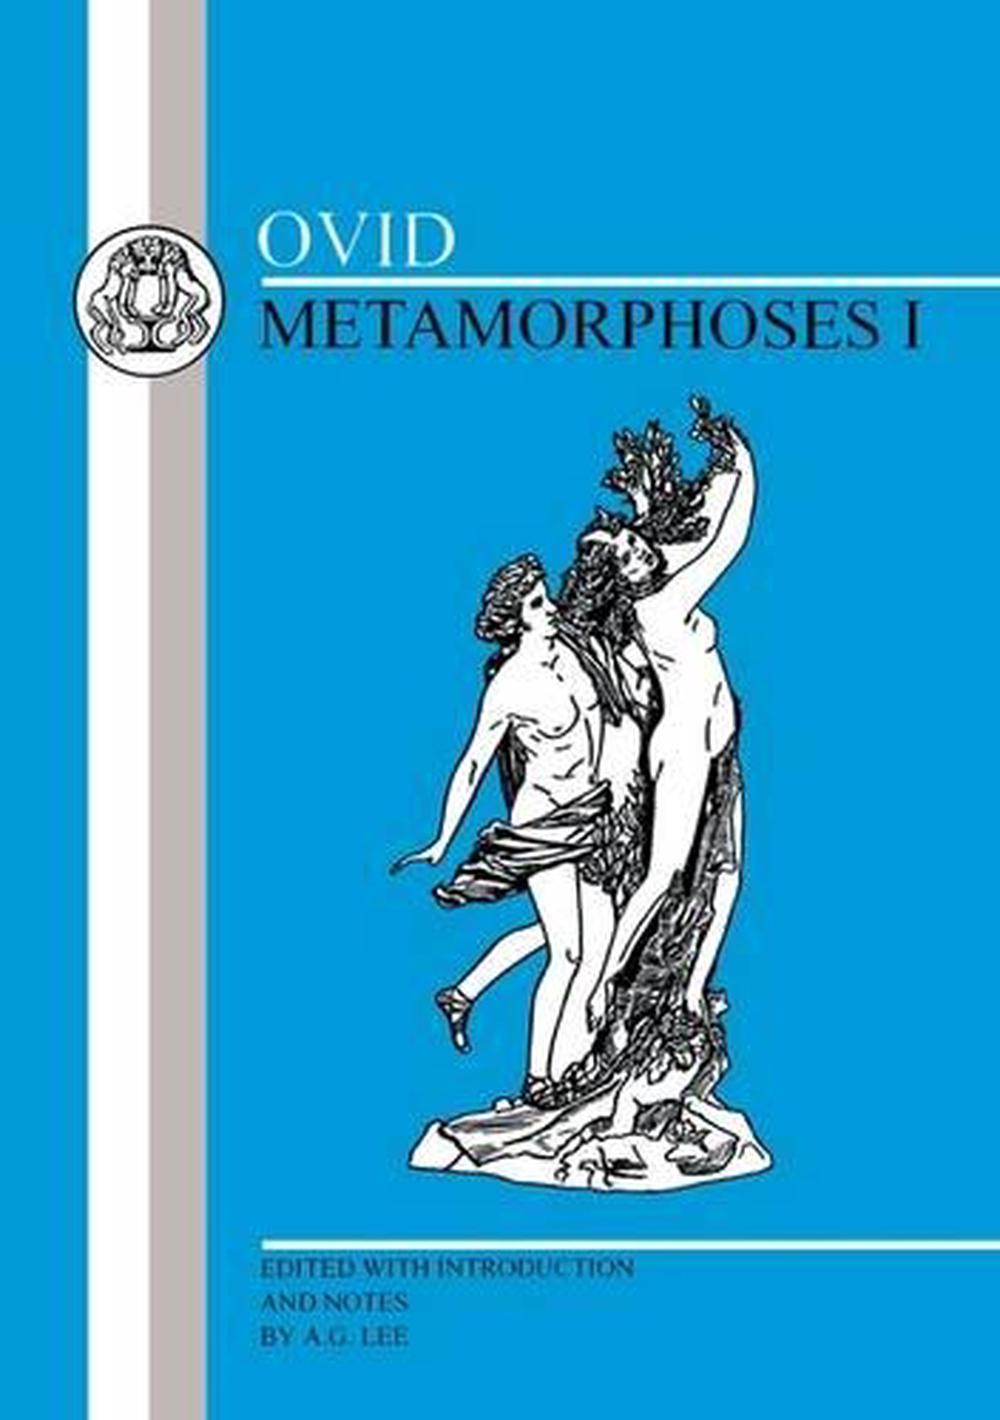 Ovid Metamorphoses I by Ovid (English) Paperback Book Free Shipping